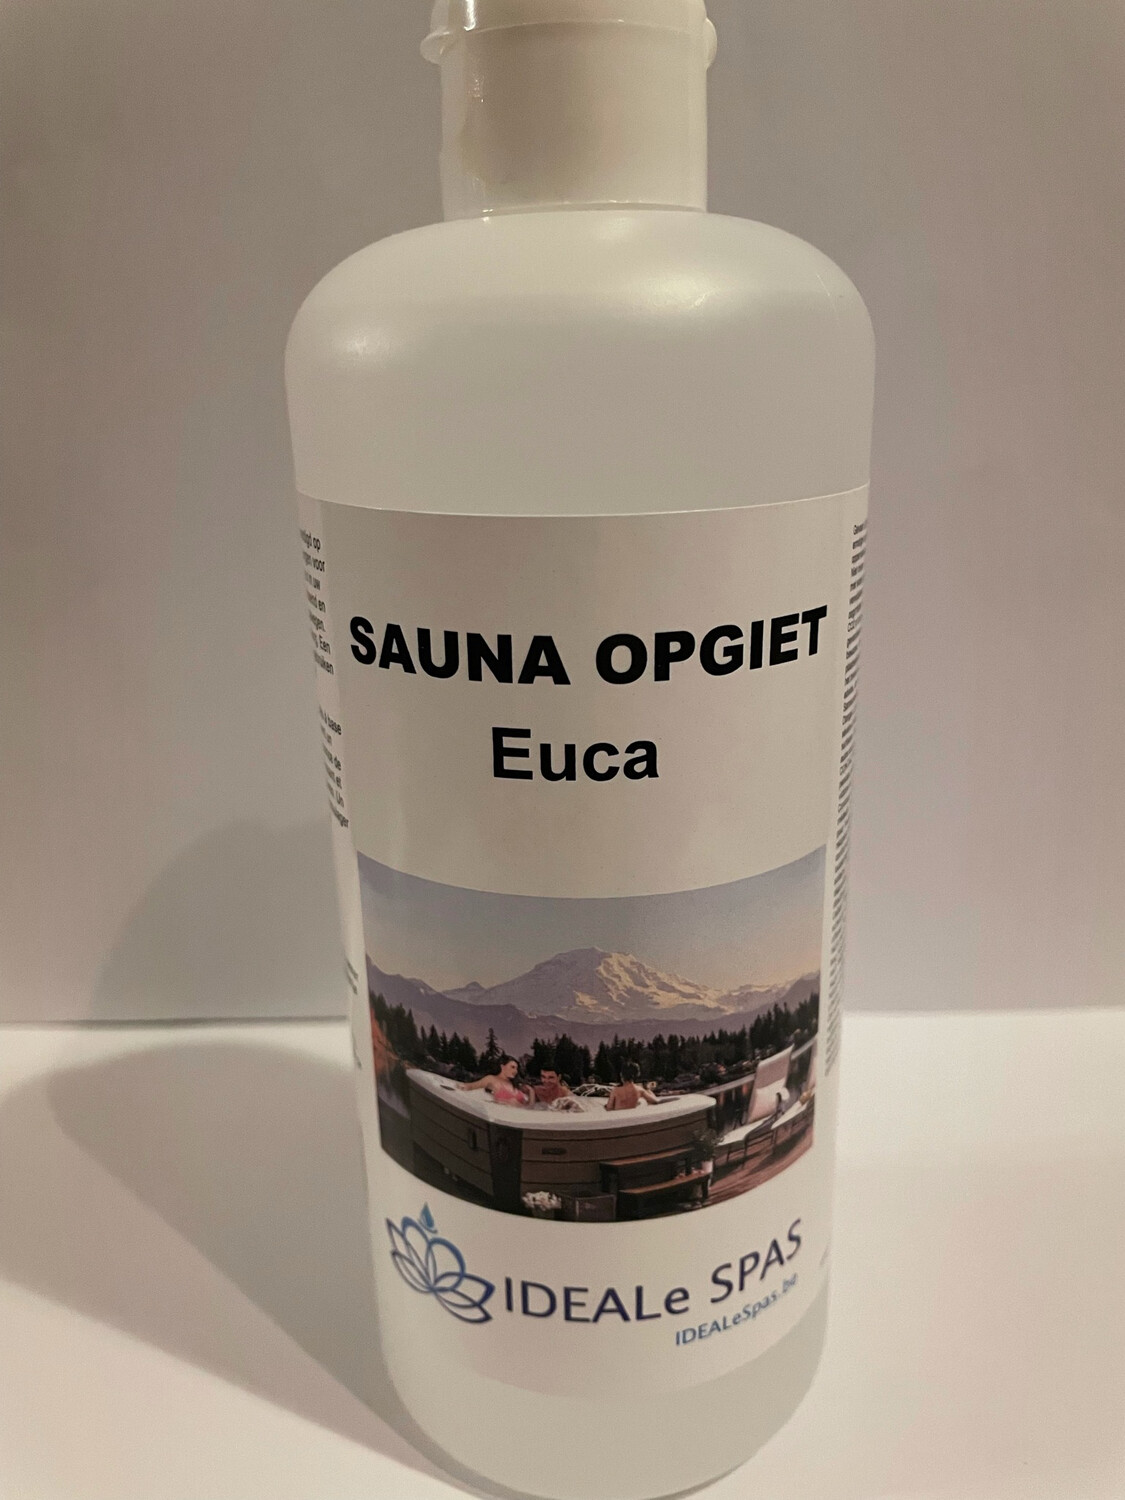 IDEALe SPAS SAUNA OPGIET - INFRAROOD EUCALYPTUS GEUR Aroma therapie zonder kleurstoffen